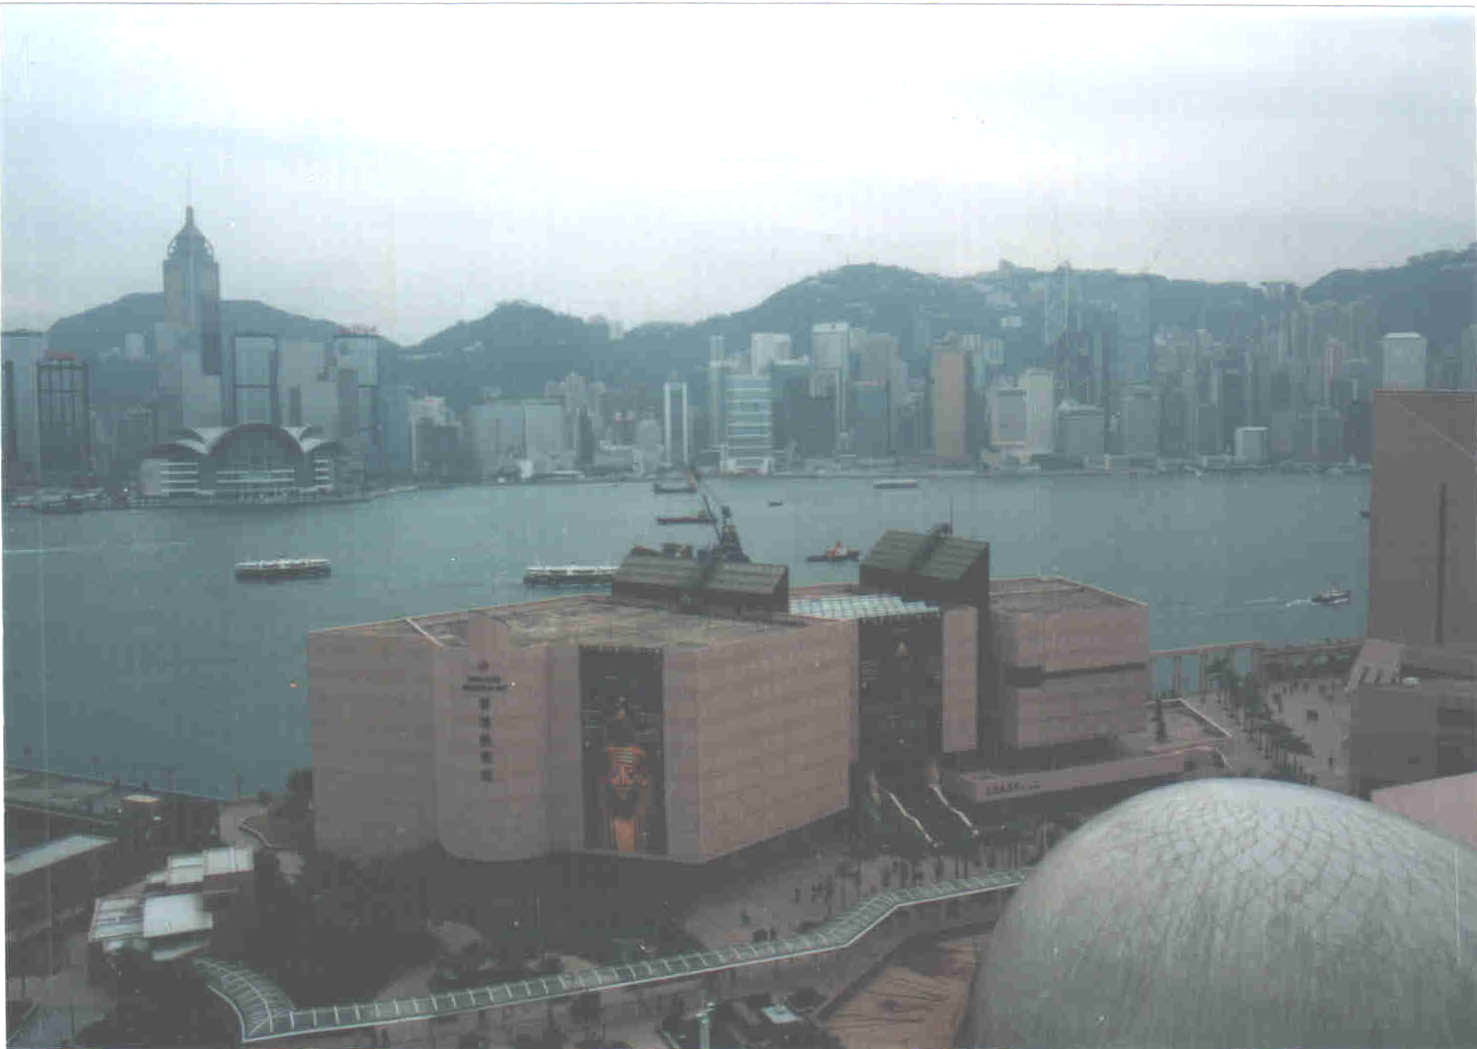 Hong Kong Sheraton view - morning